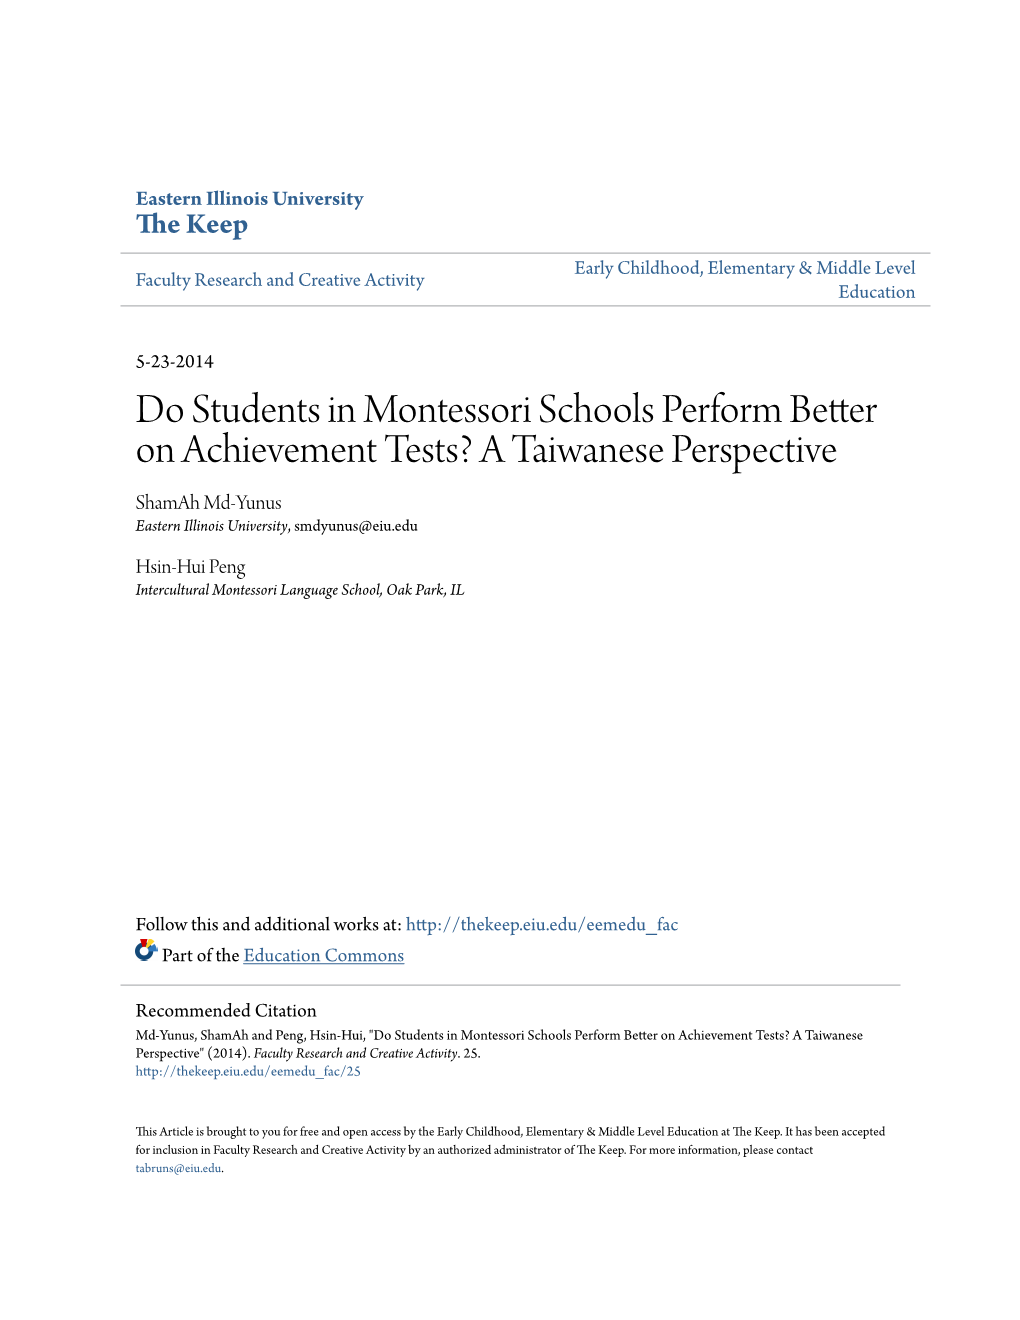 Do Students in Montessori Schools Perform Better on Achievement Tests? a Taiwanese Perspective Shamah Md-Yunus Eastern Illinois University, Smdyunus@Eiu.Edu